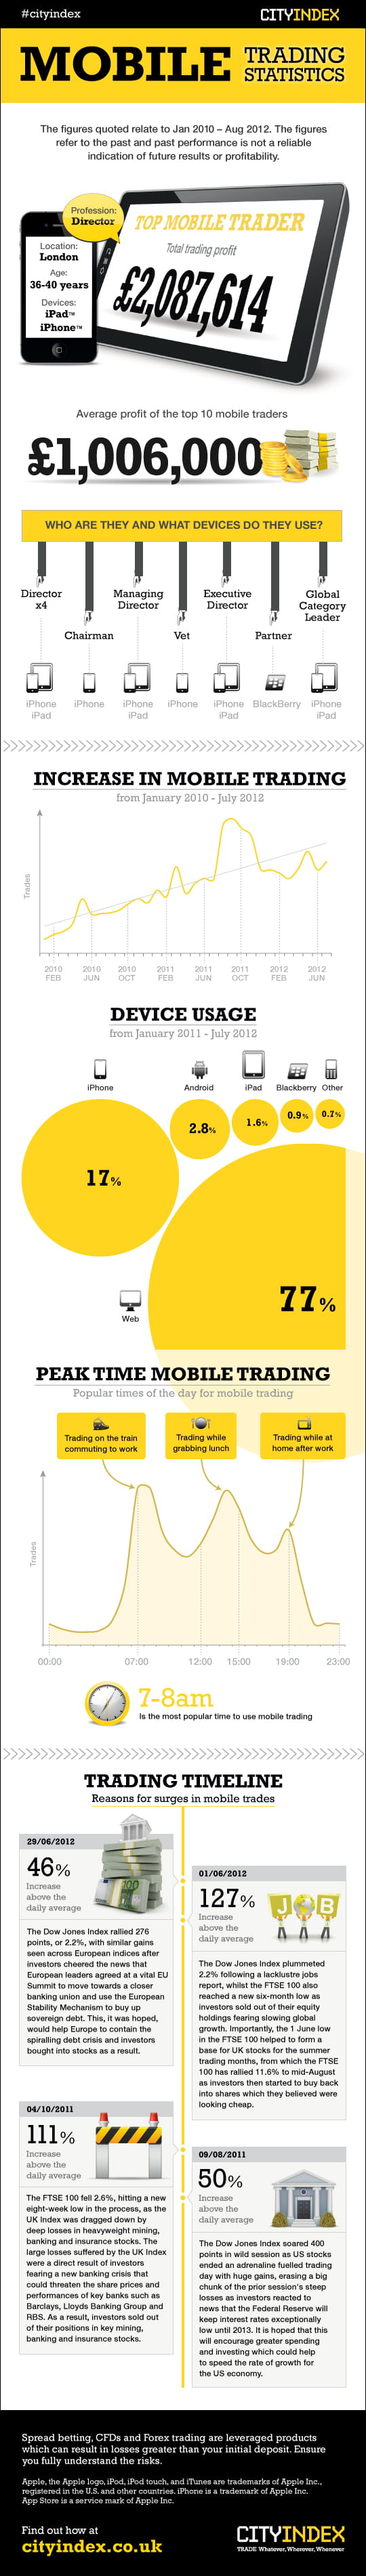 Mobile Trading Statistics